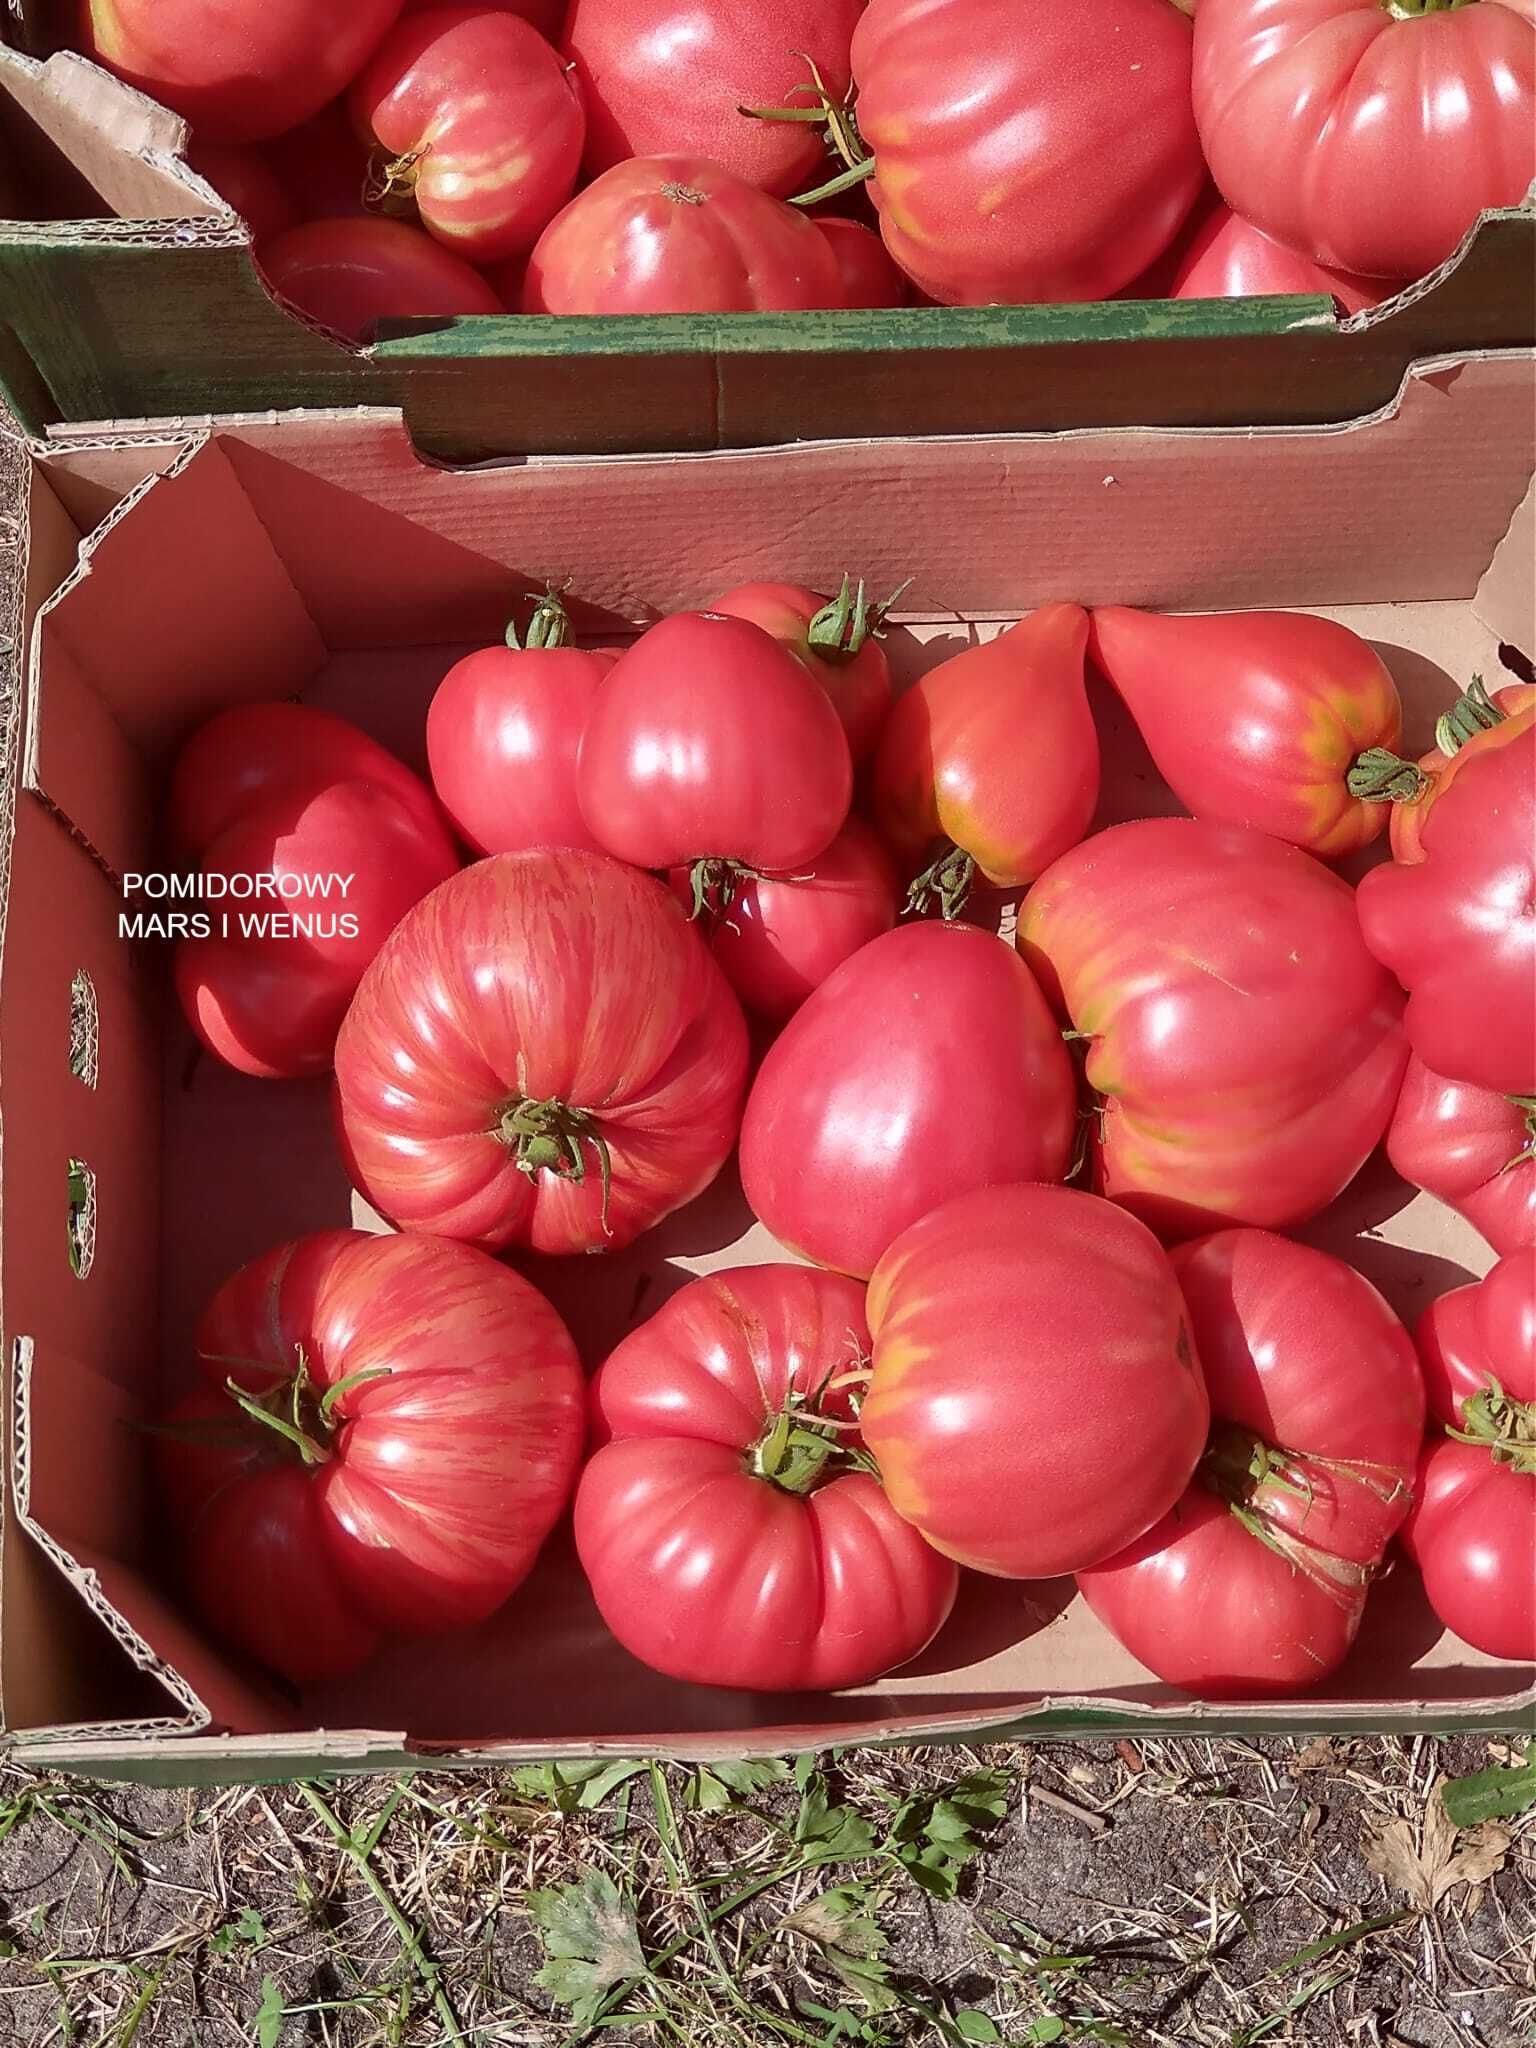 7 Odmian Nasion Pomidora Z Moich Ogłoszeń